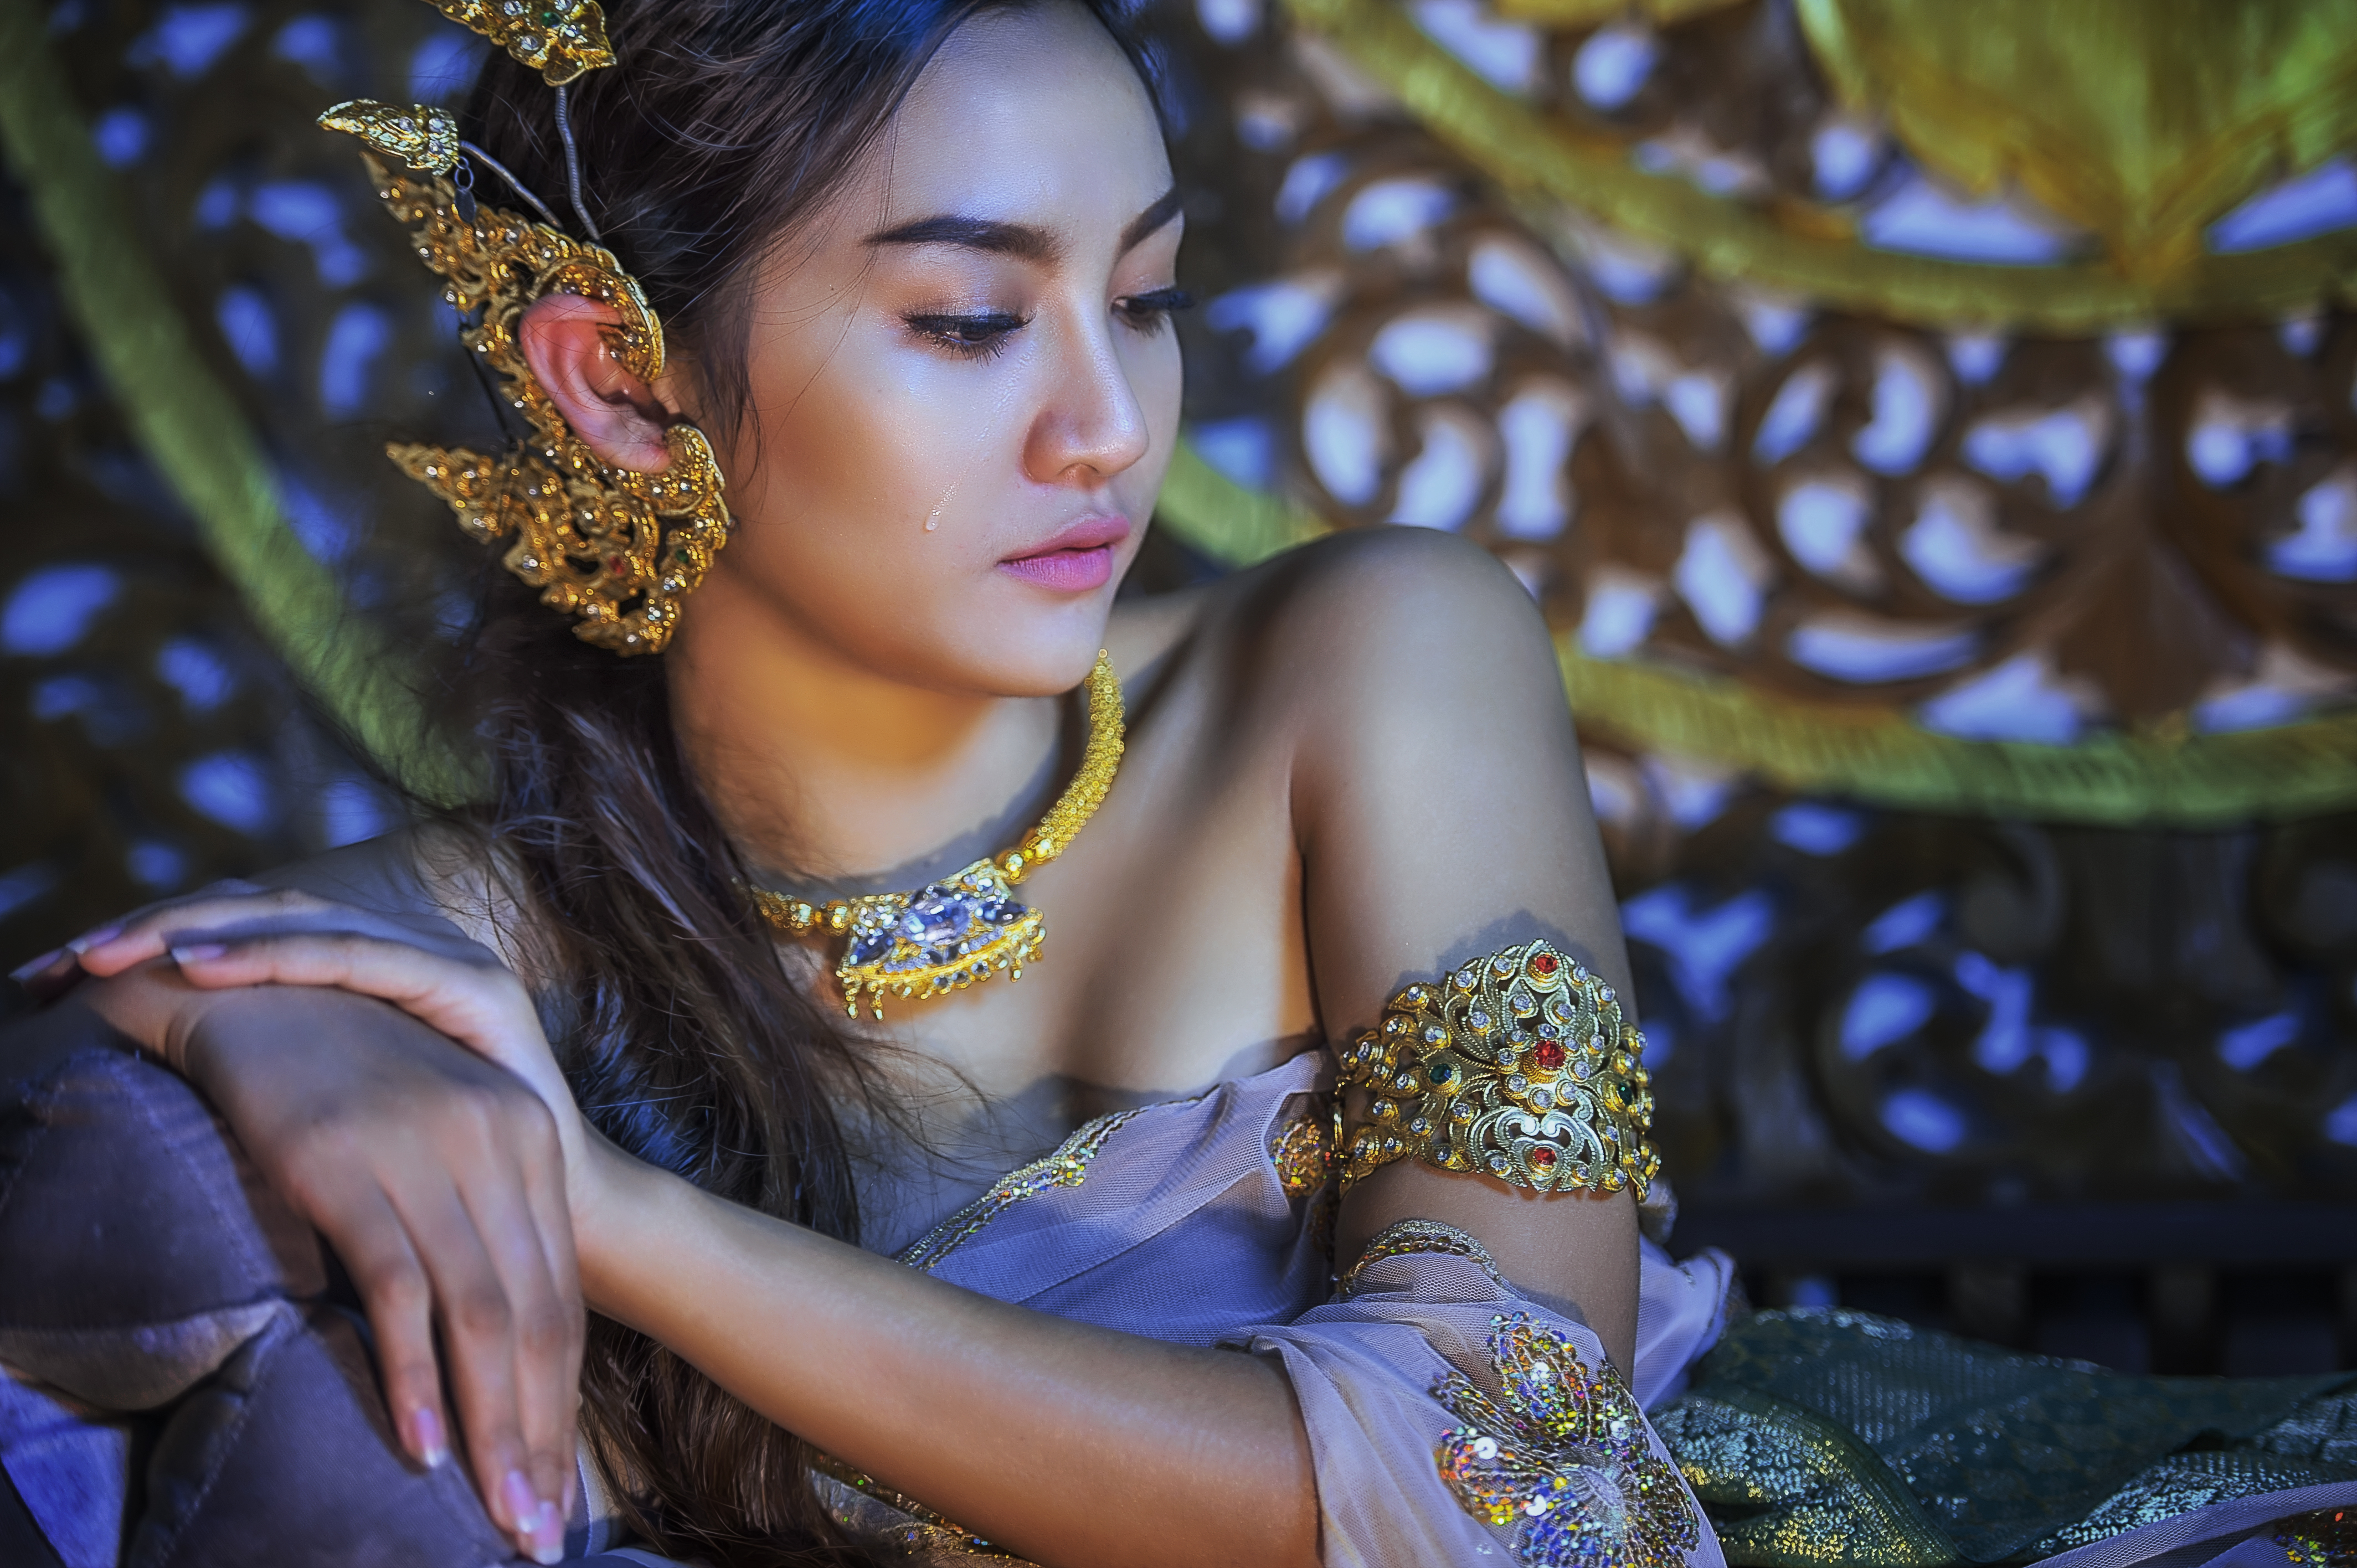 Davika Hoorne Thailand Model Wallpapers